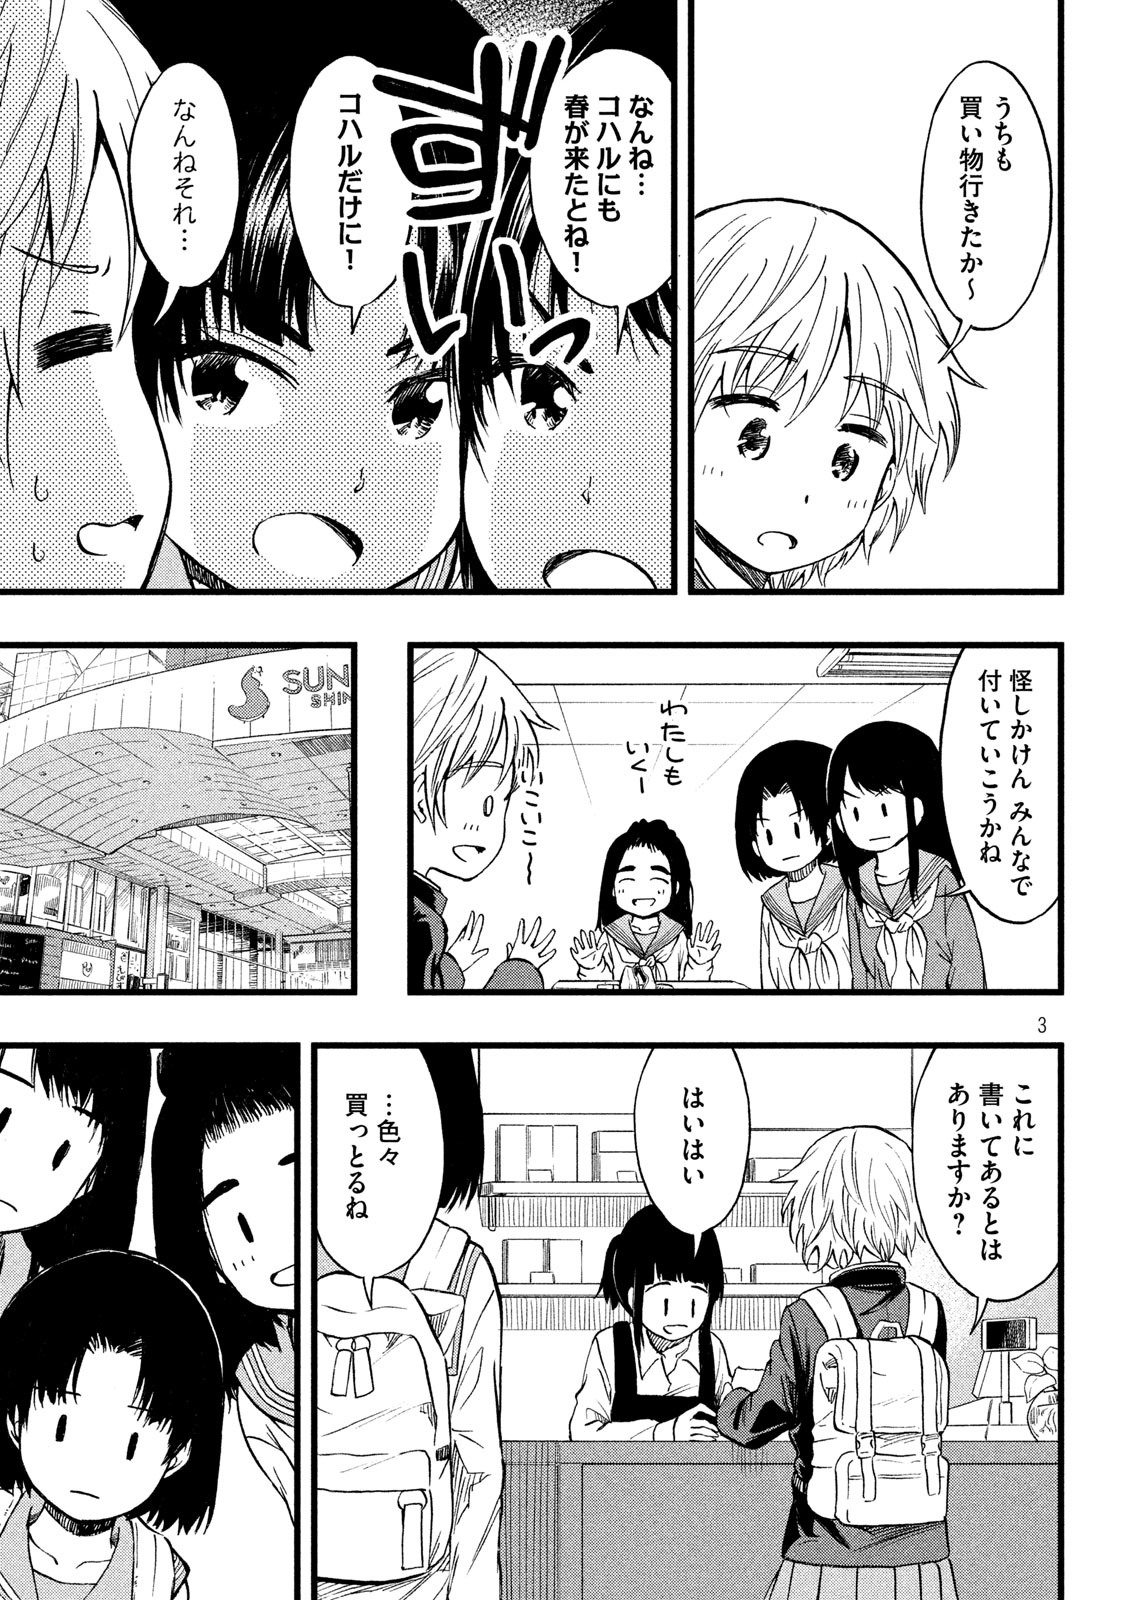 Koharu haru! - Chapter 46 - Page 3